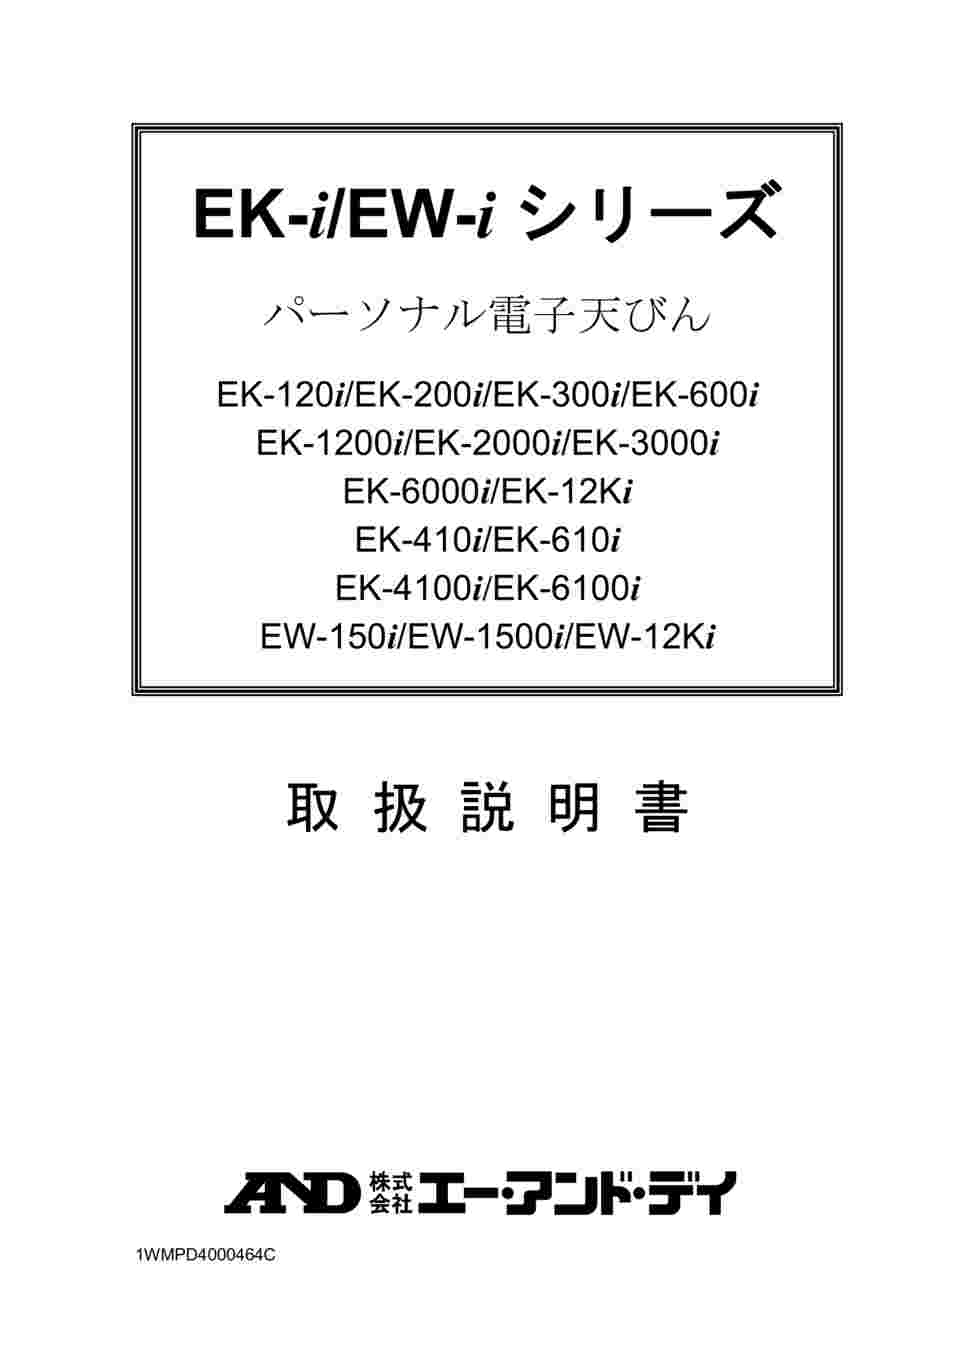 AD パーソナル電子天秤(4) EW-12KI